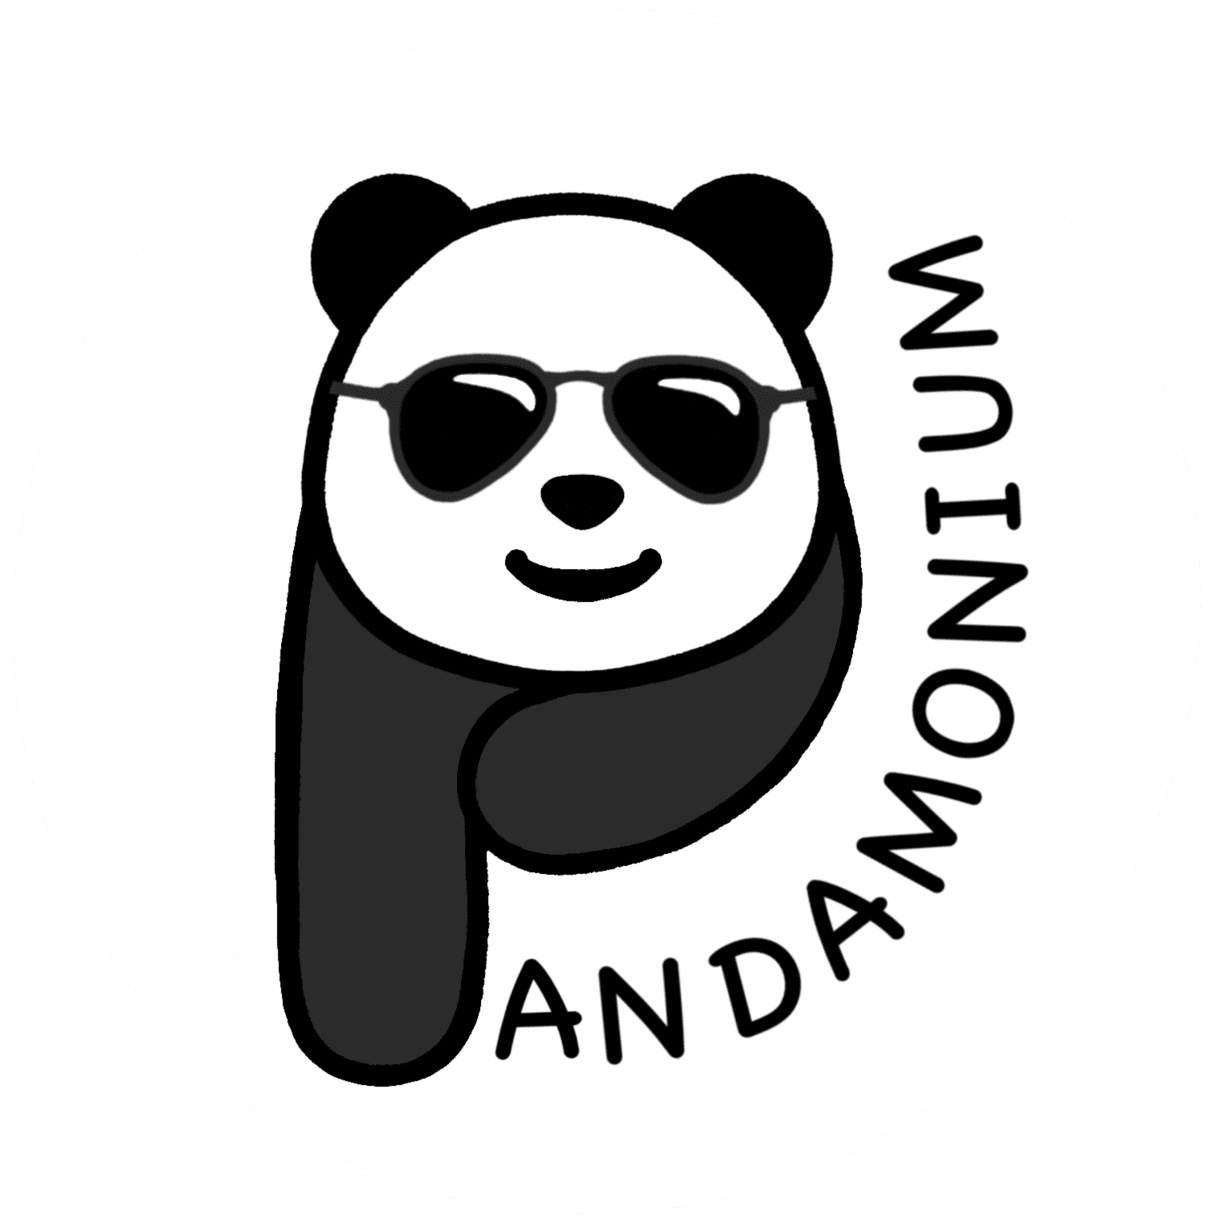 Pandamonium World